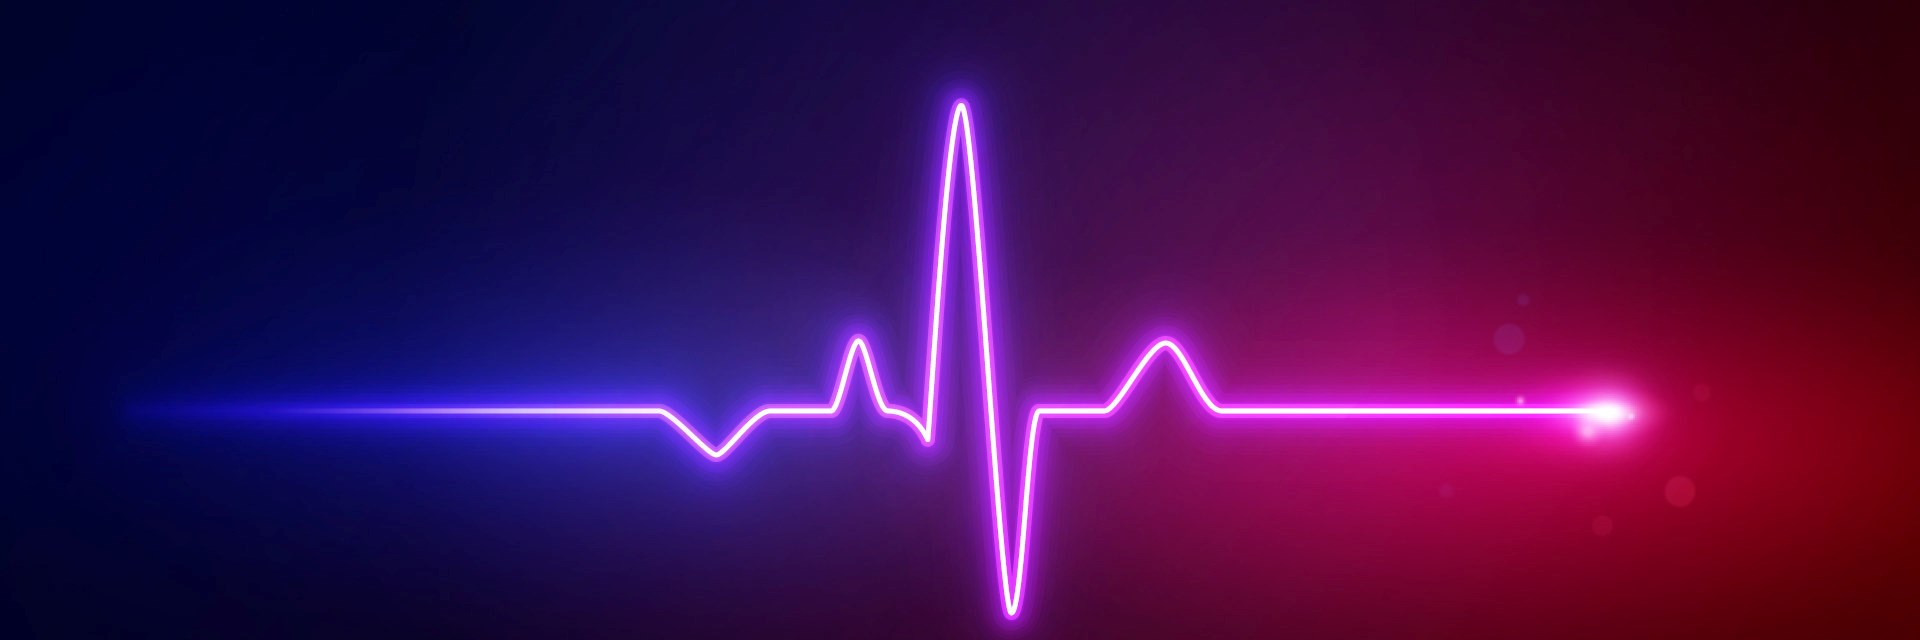 Illustration of ECG heartbeat